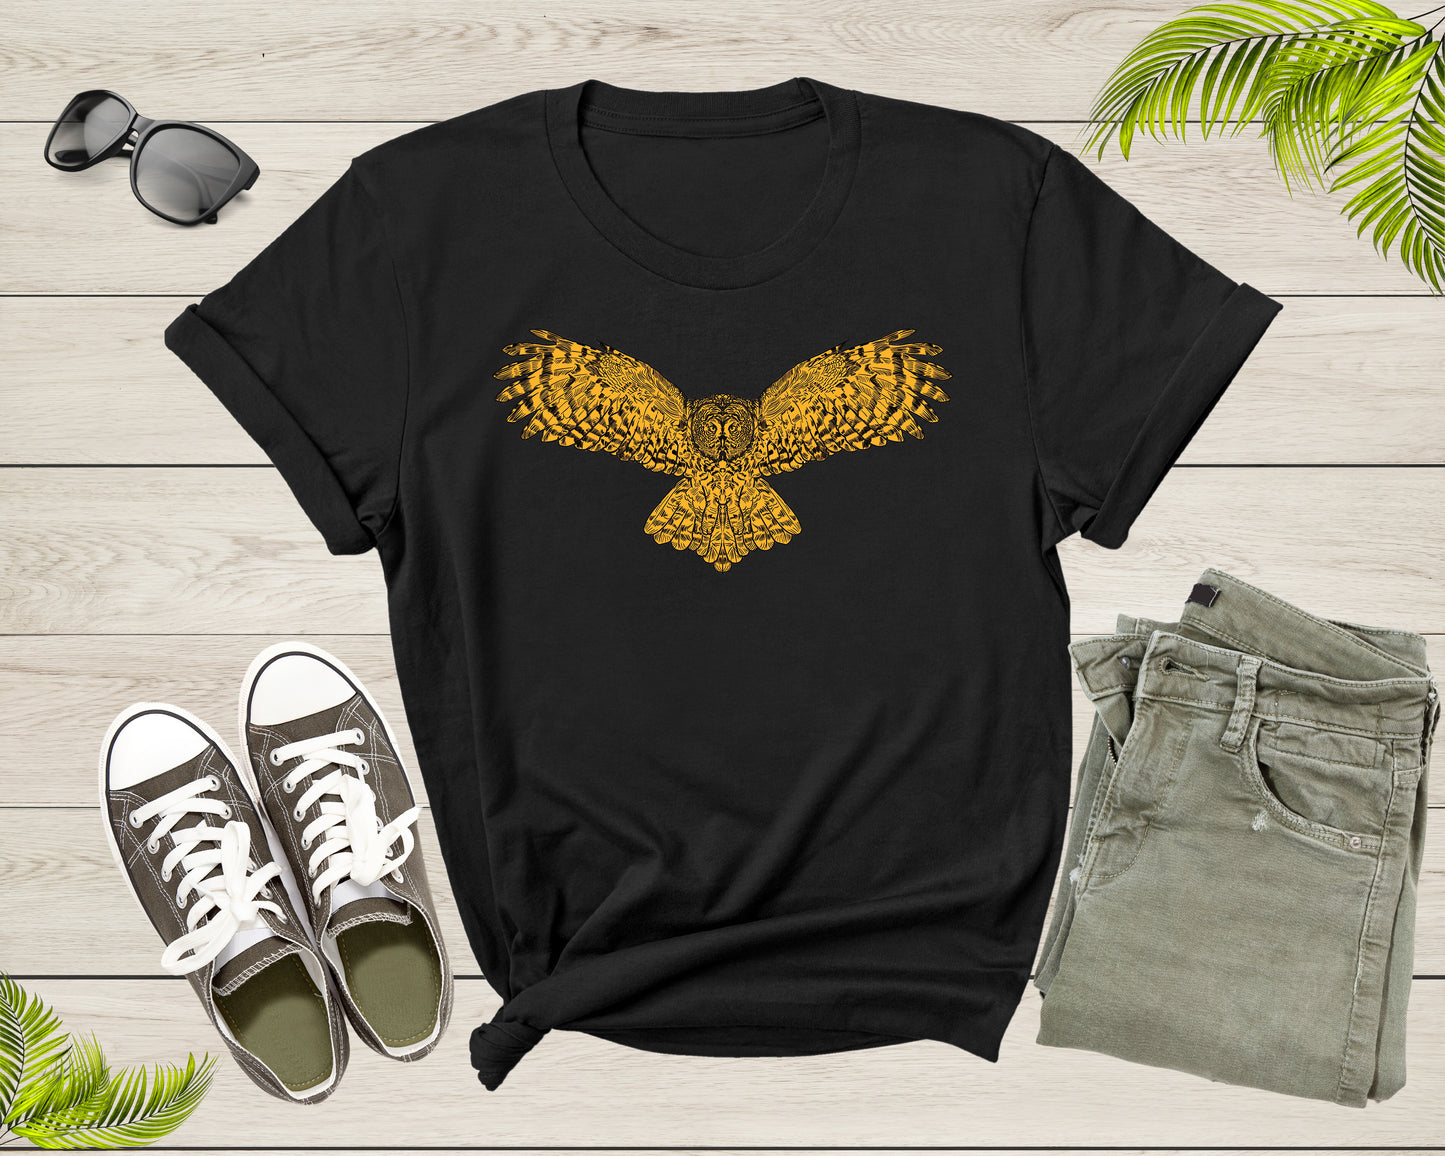 Cute Cool Flying Owl Bird of Night Hooter Owlet Owleez Bird T-Shirt Owl Lover Gift T Shirt for Men Women Kids Boys Girls Graphic Tshirt